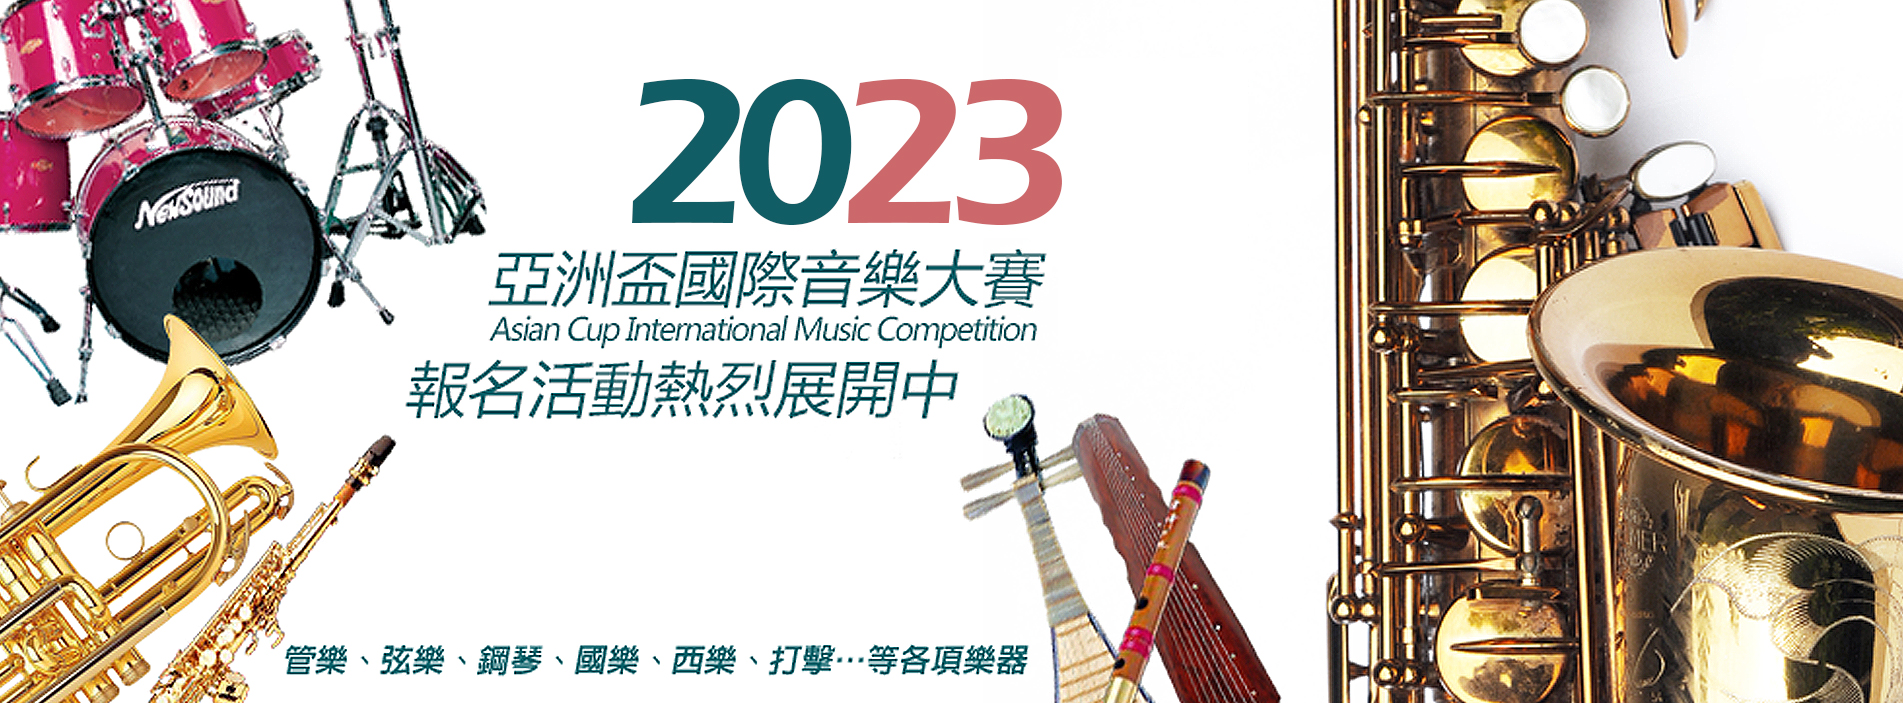 2023 亞洲盃國際音樂大賽 International Asian Music Competition